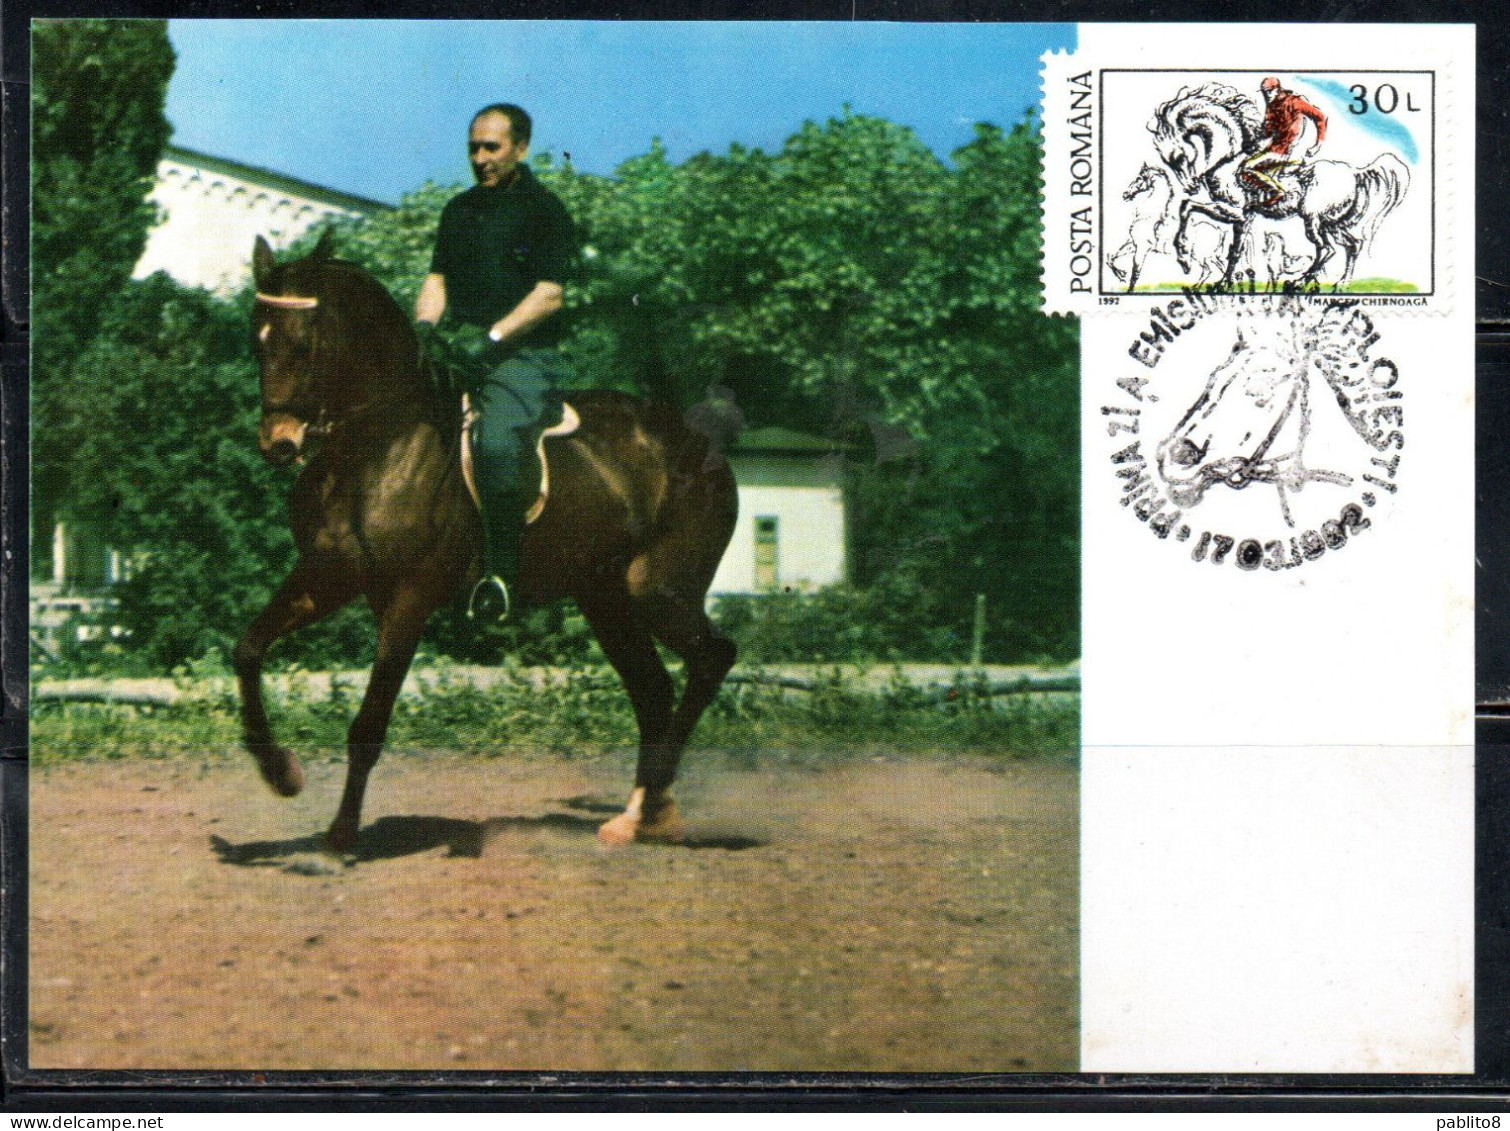 ROMANIA 1992 HORSES 30L MAXI MAXIMUM CARD - Cartes-maximum (CM)